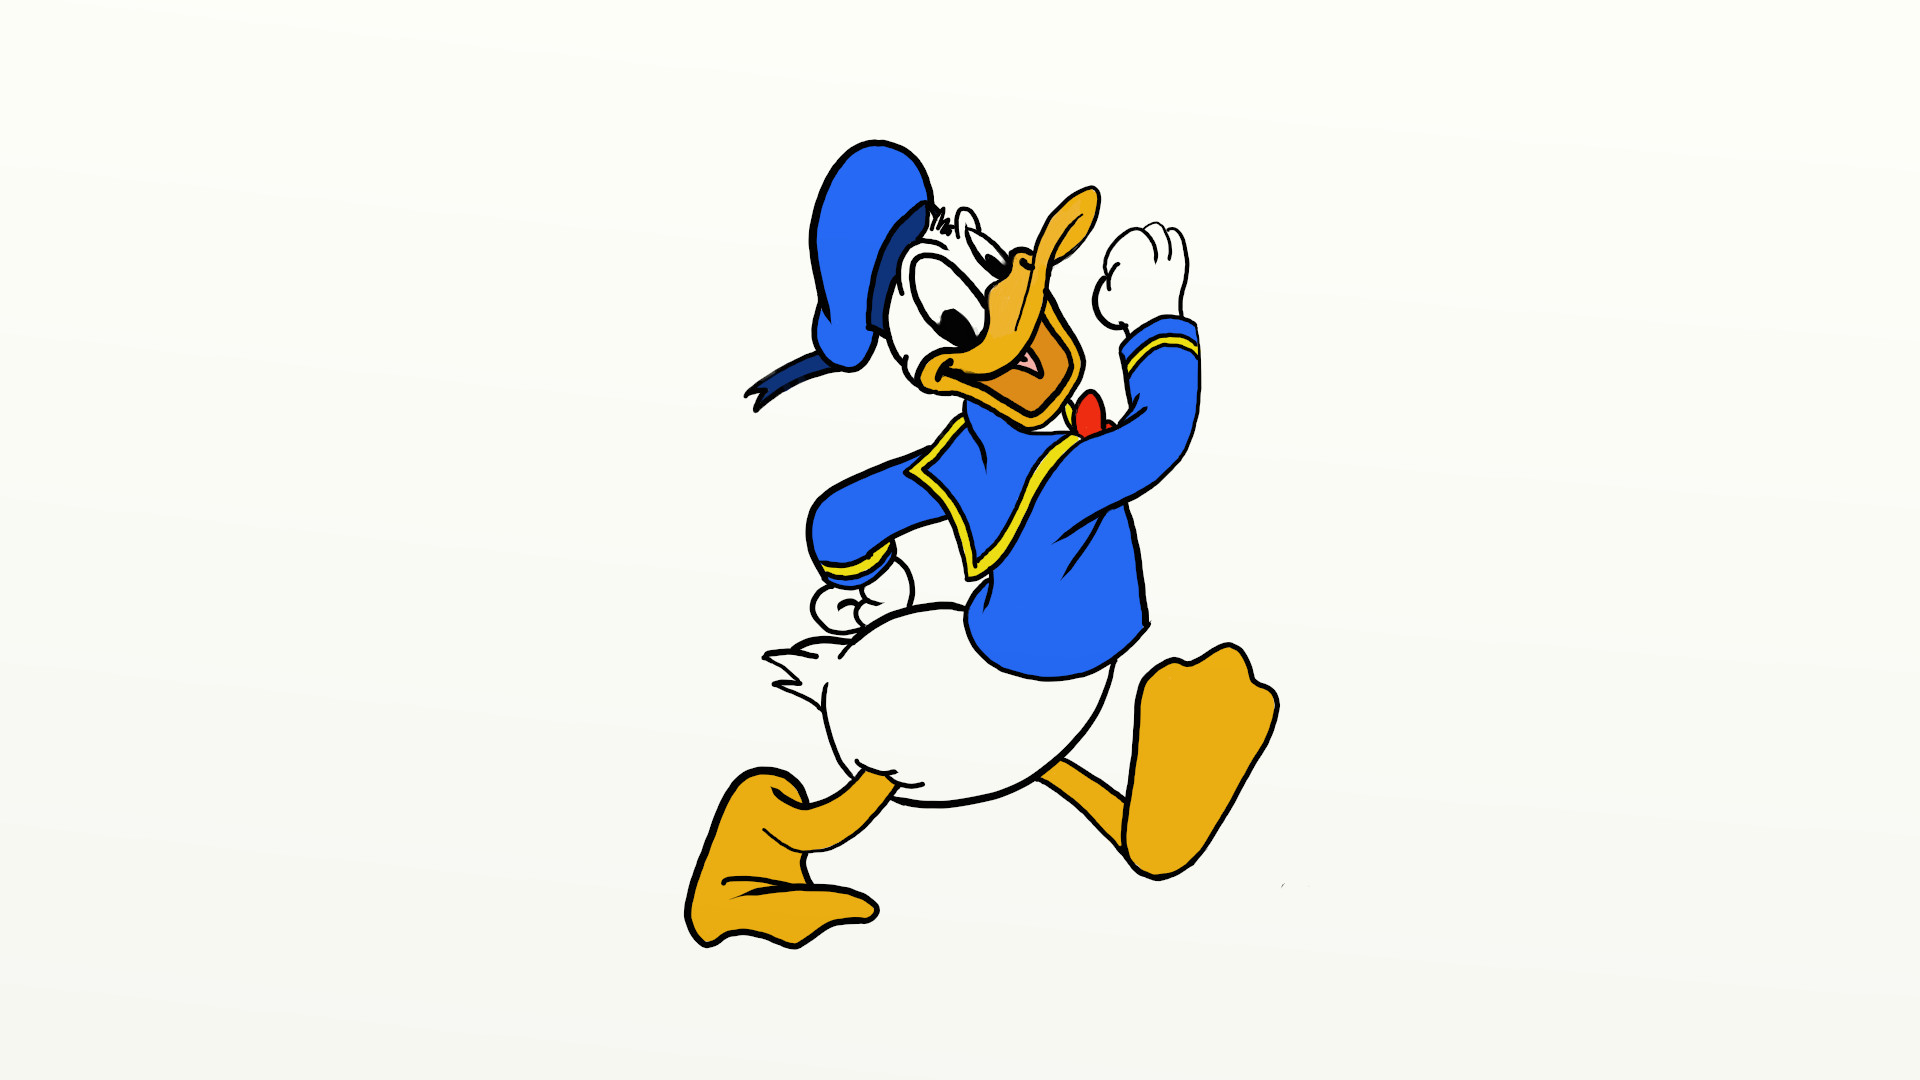 ArtStation - Drawing Donald Duck